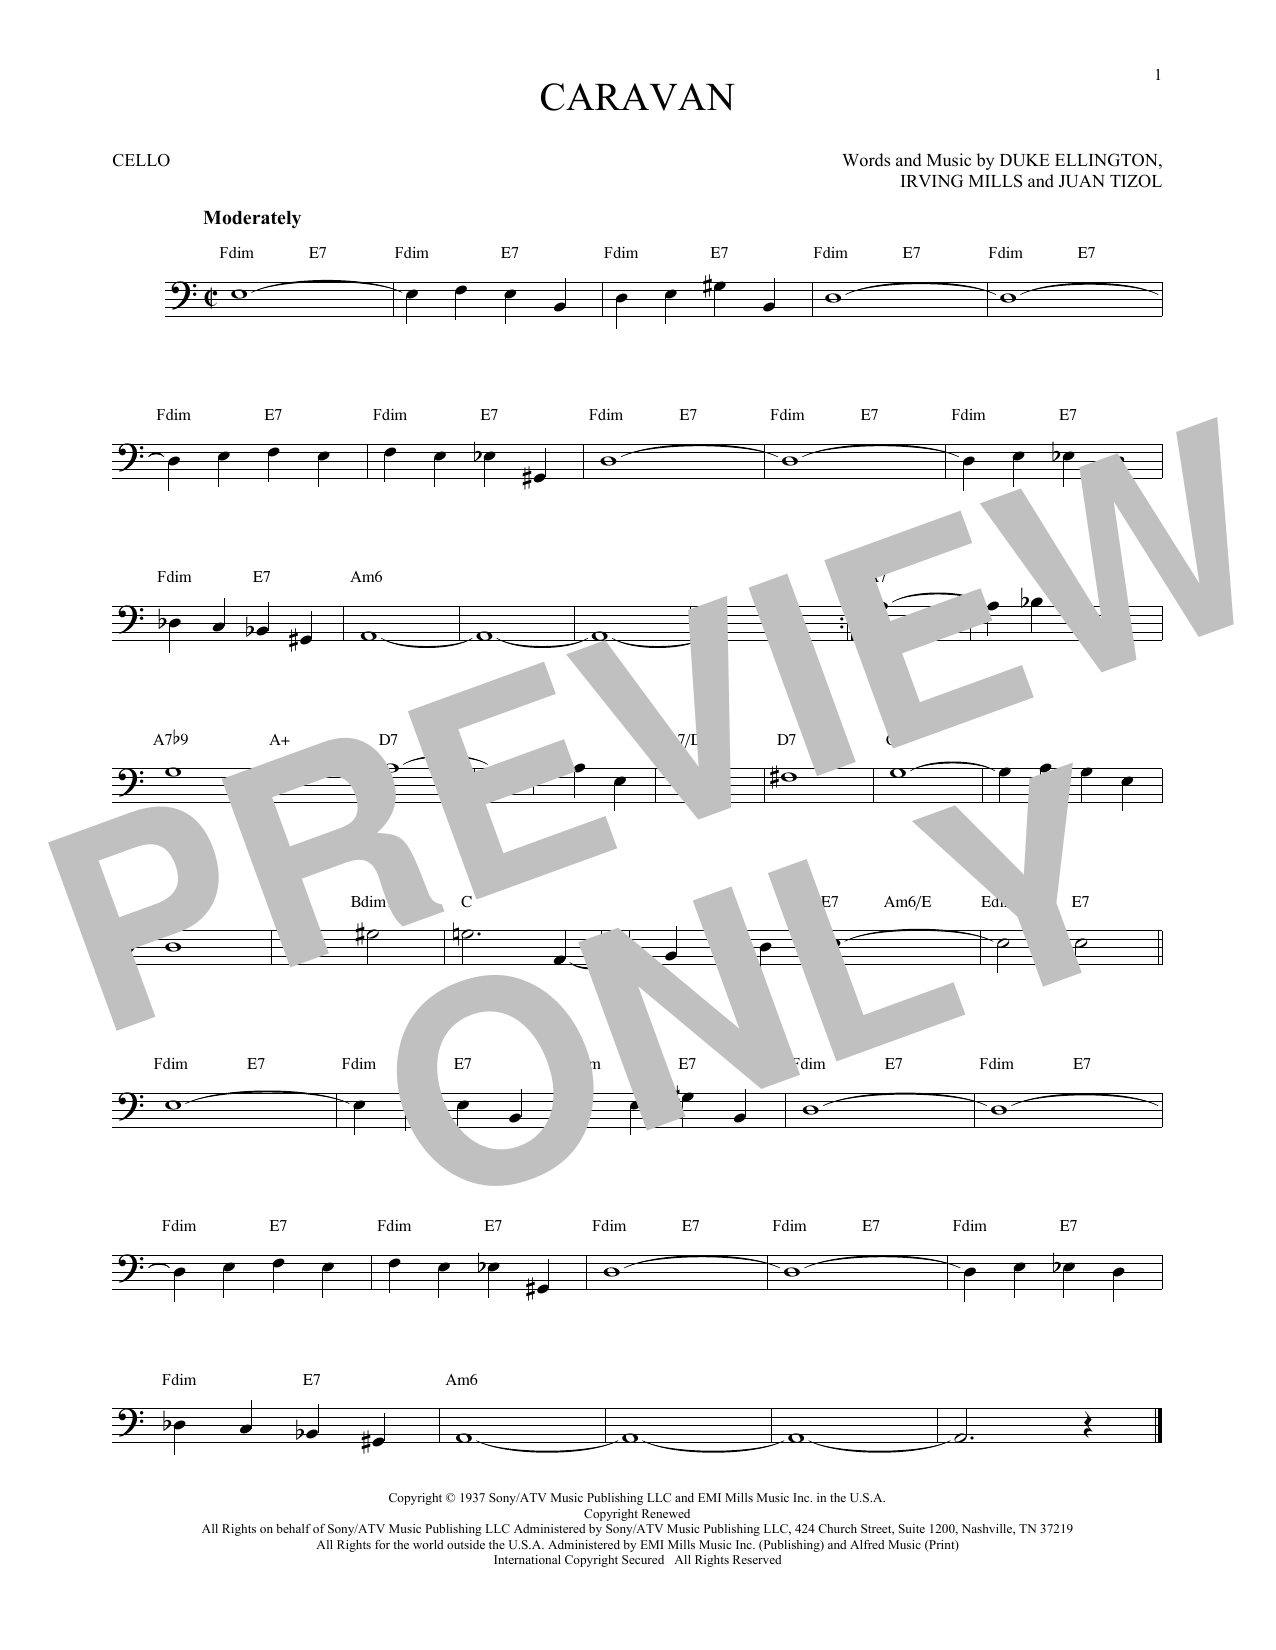 Download Juan Tizol & Duke Ellington Caravan Sheet Music and learn how to play French Horn PDF digital score in minutes